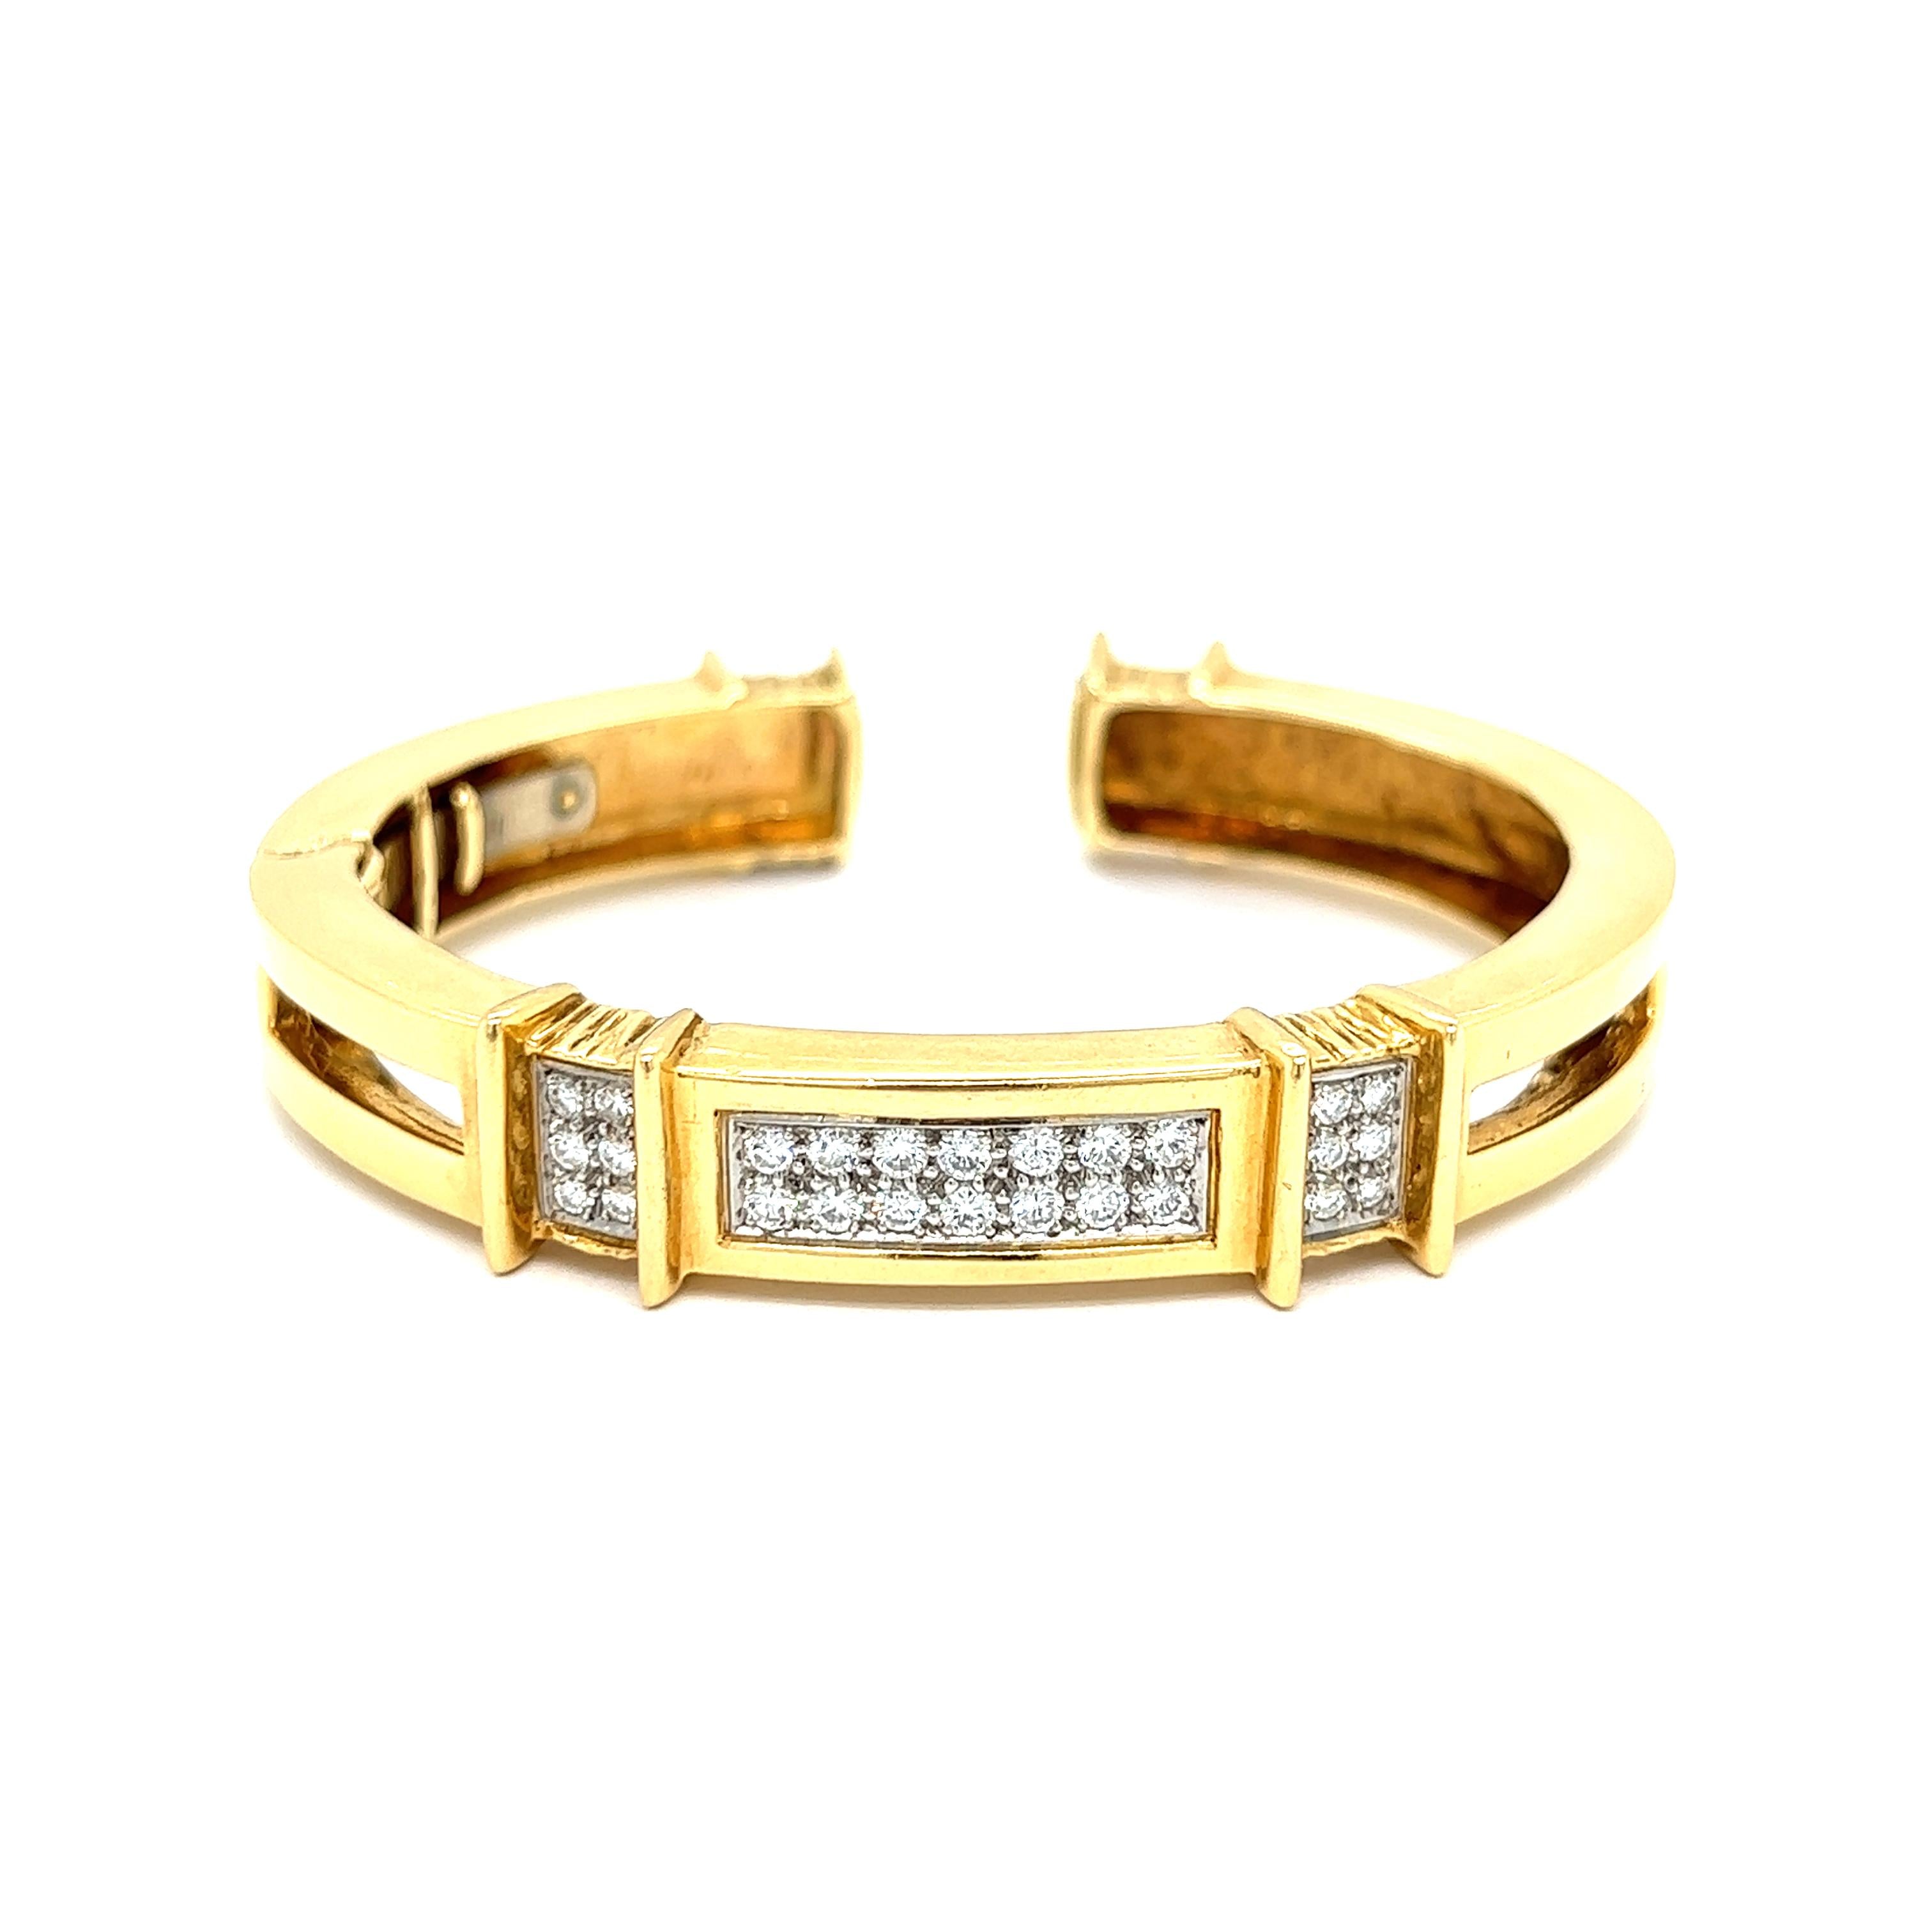 Vintage 1.5 carats Diamond 18K Gold Bangle